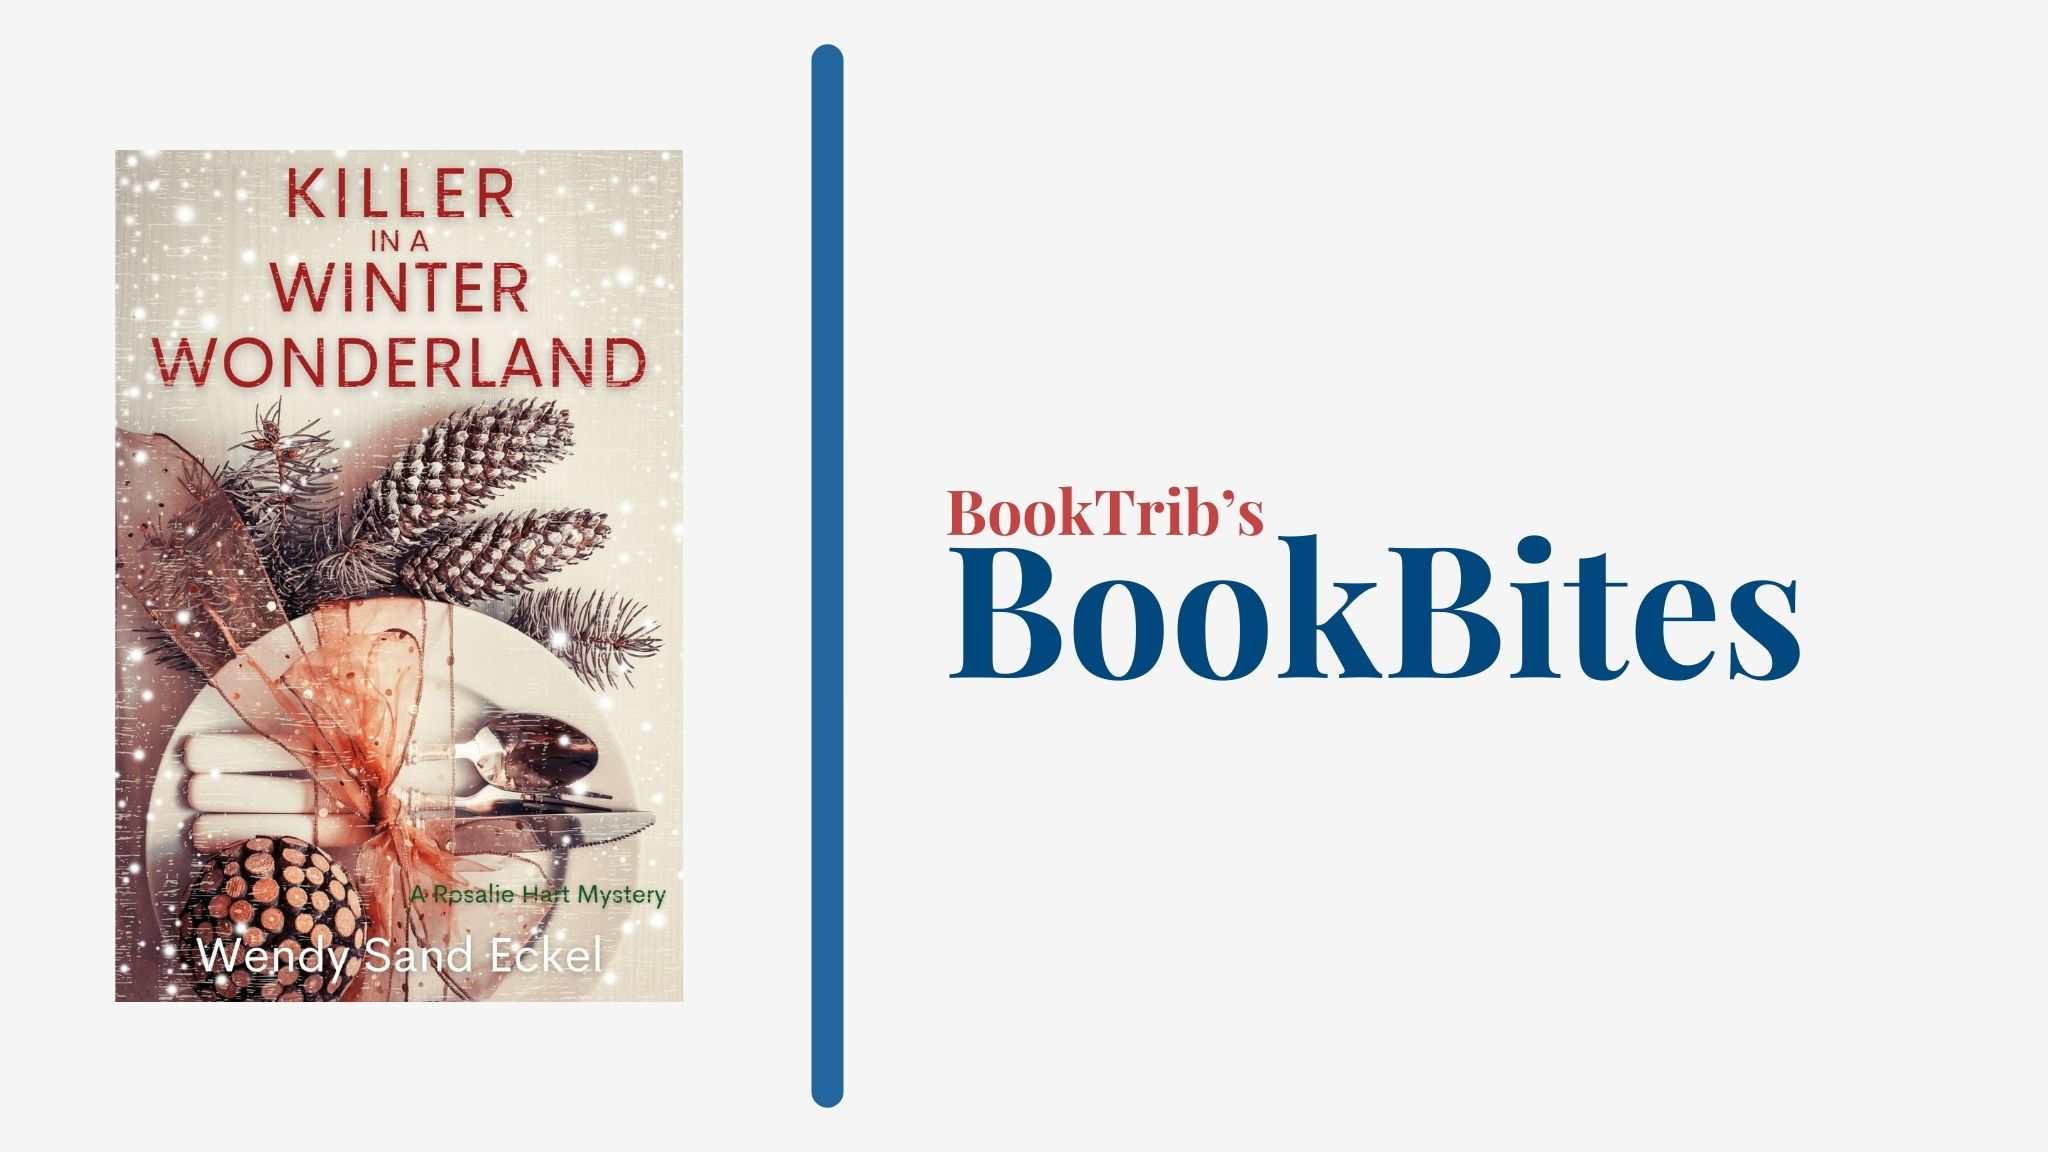 BookTrib's BookBites - Killer in a Winter Wonderland by Wendy Sand Eckel